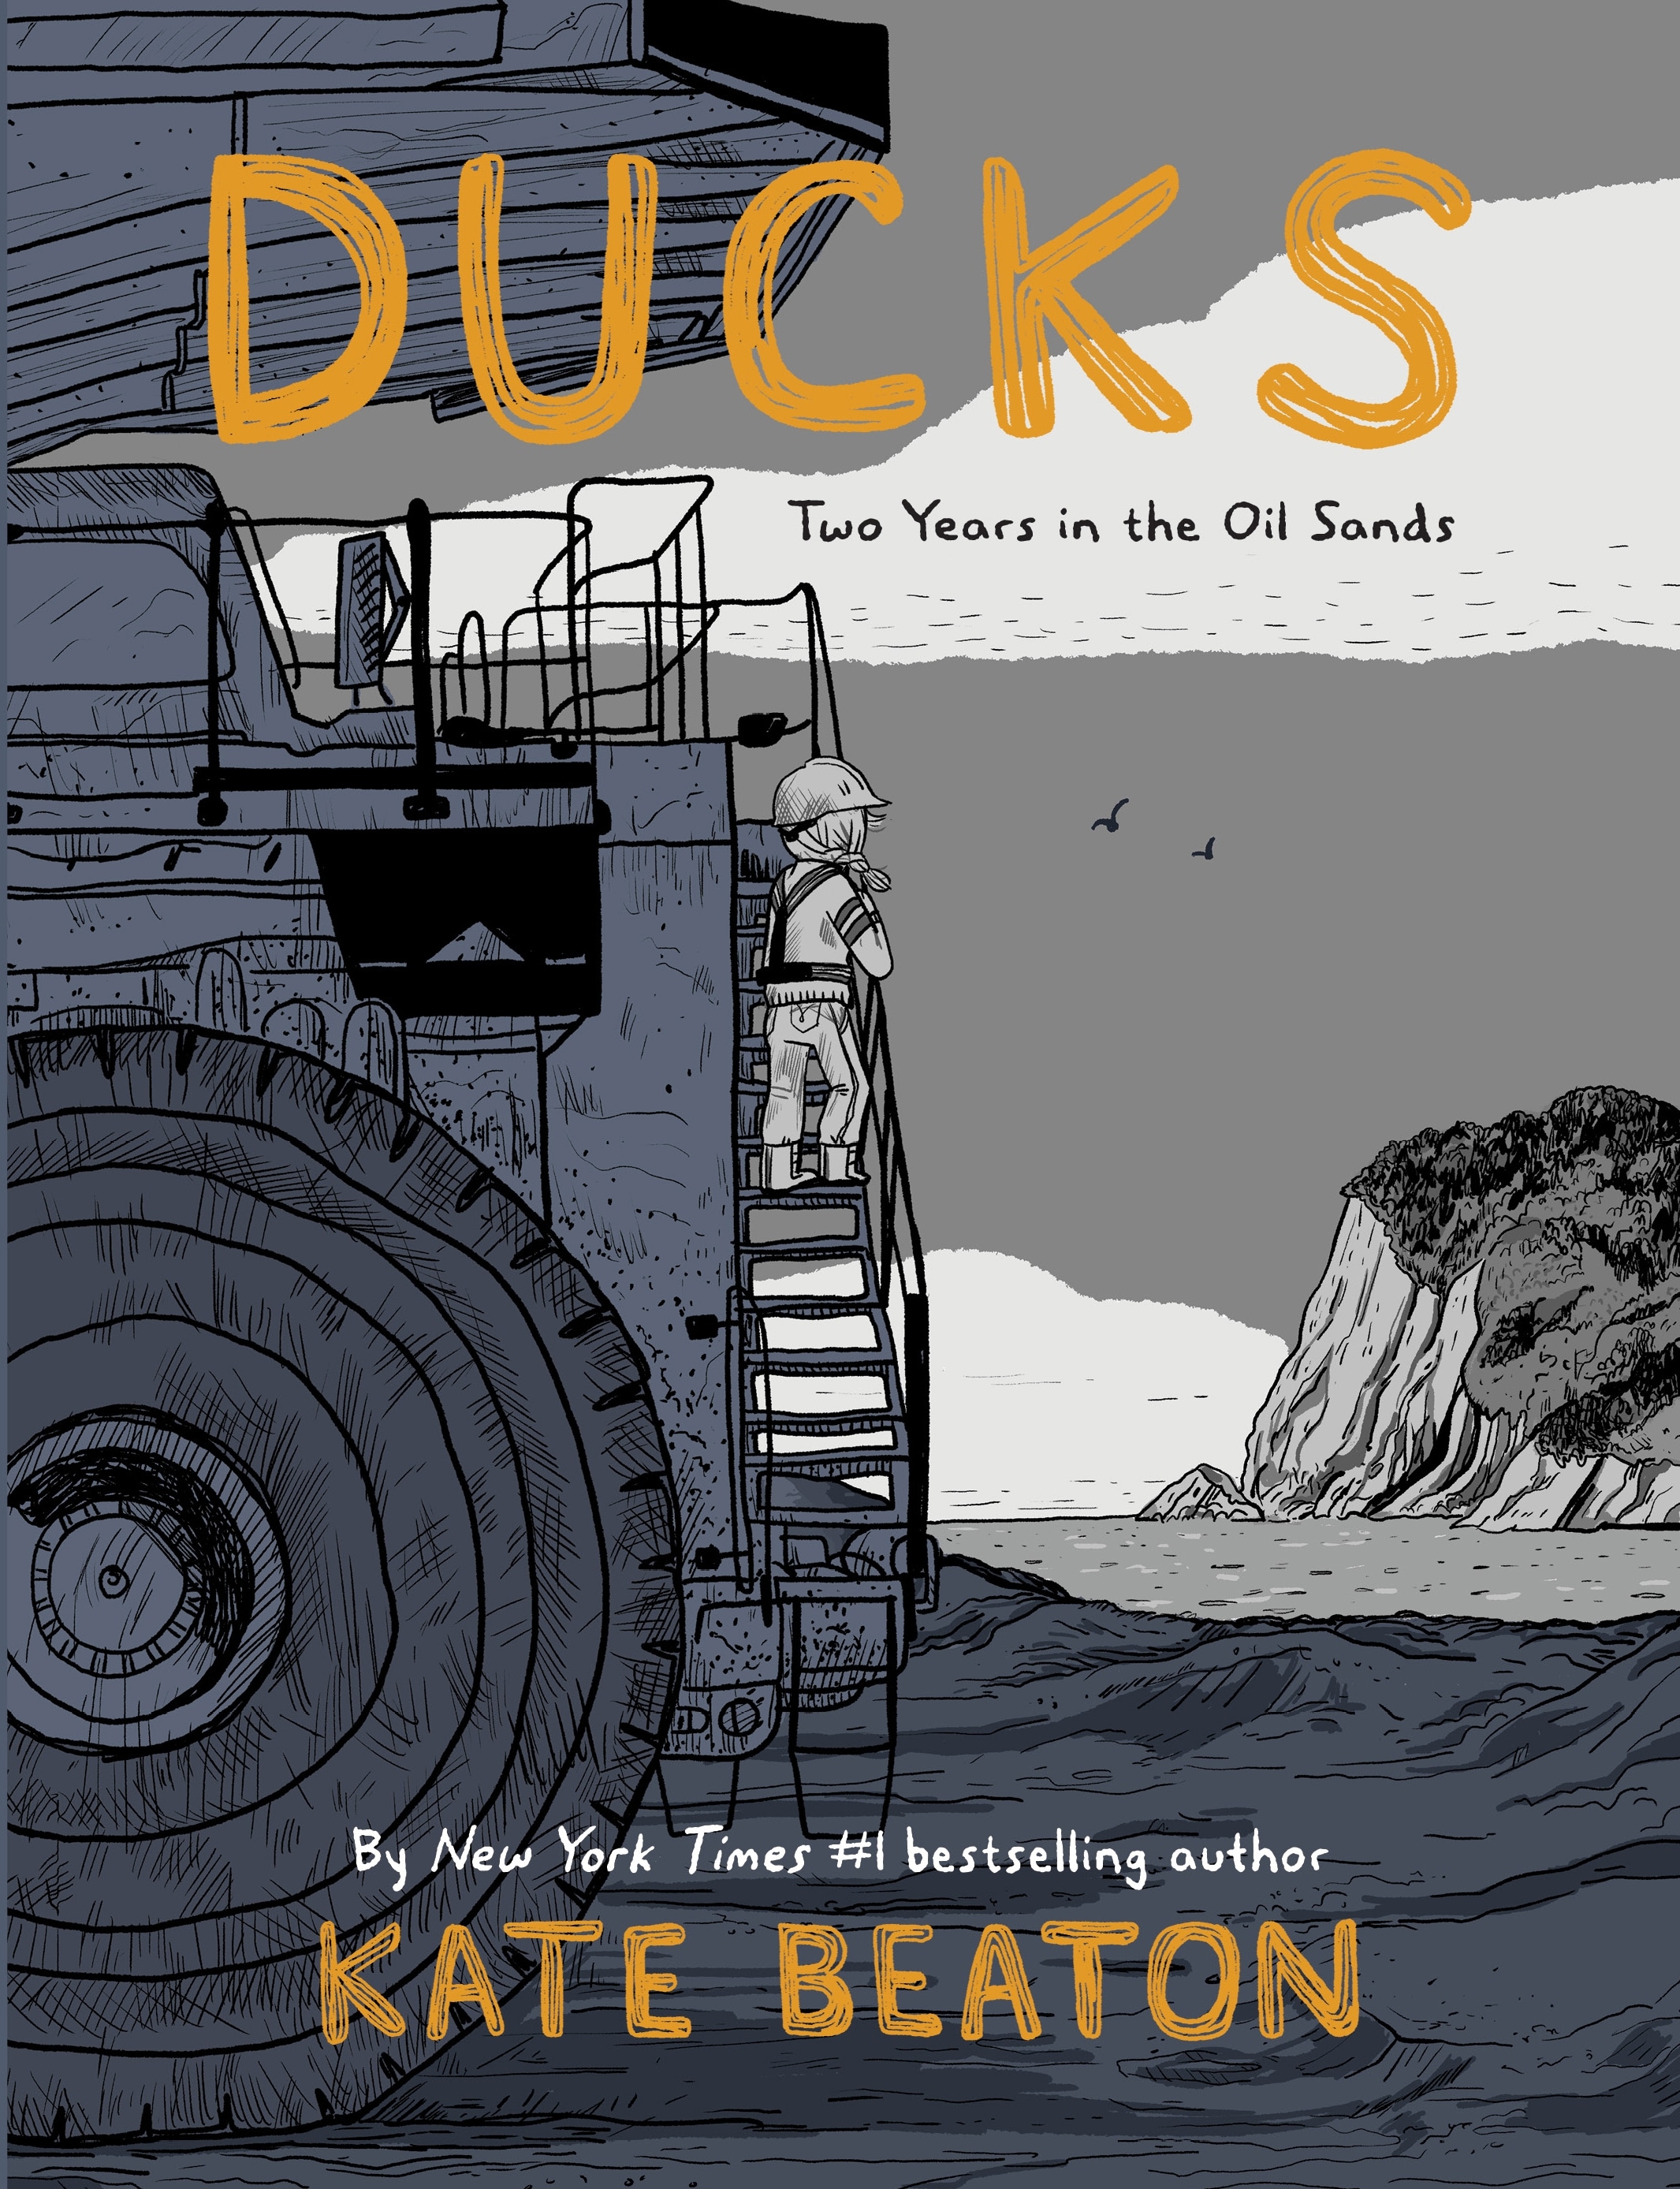 Book “Ducks” by Kate Beaton — September 15, 2022